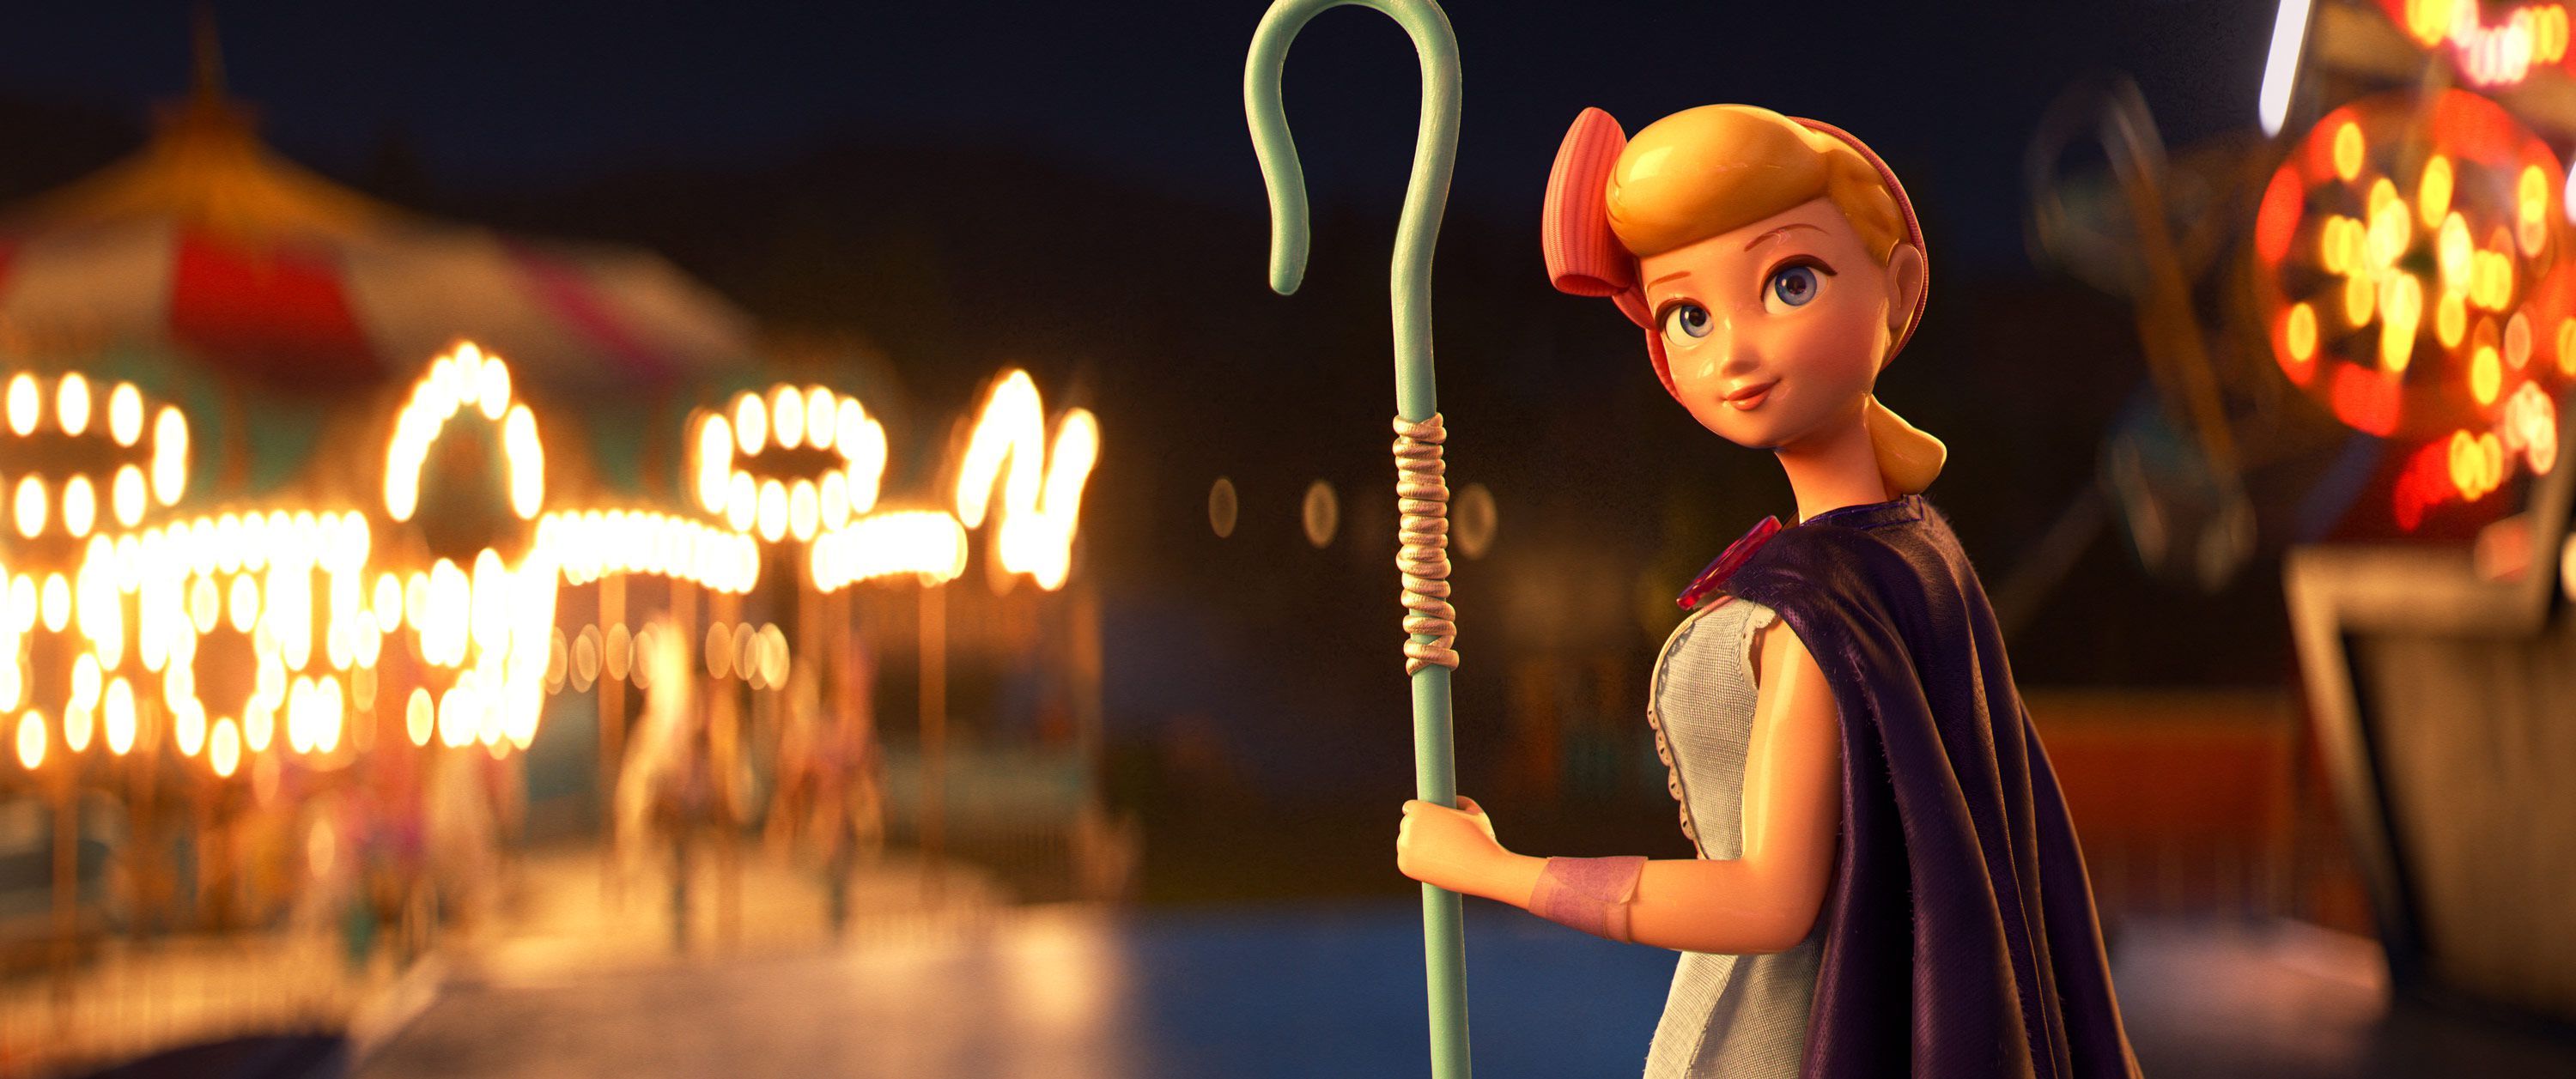 Toy Story 4 Nos Regala A Bo Pep La Heroina Feminista Que